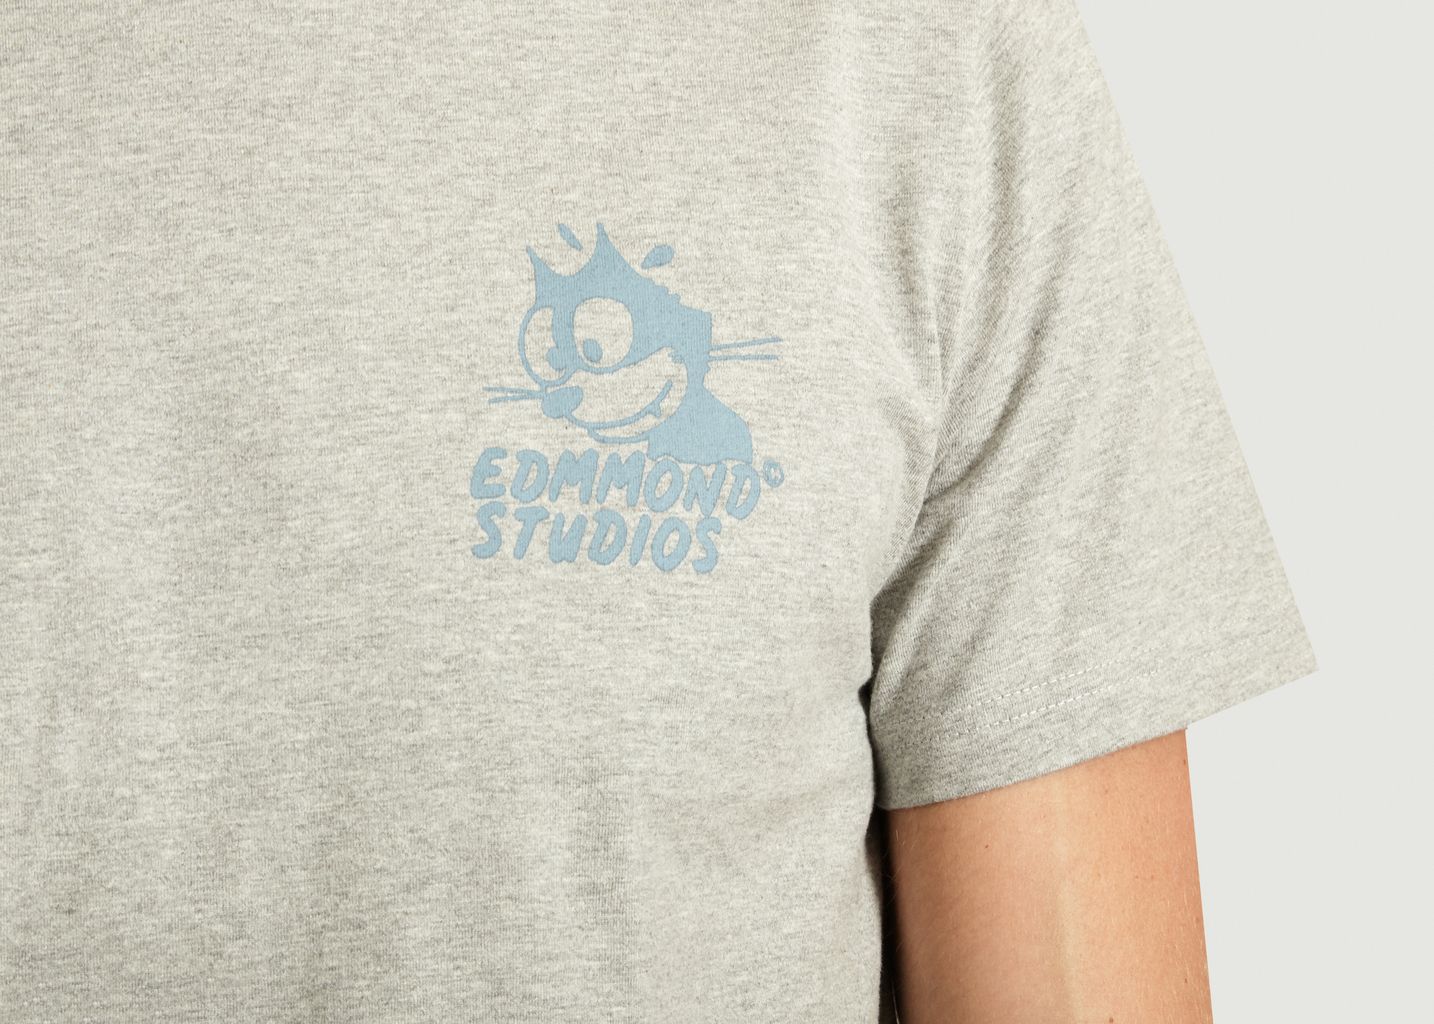 Bomb T-shirt - Edmmond Studios